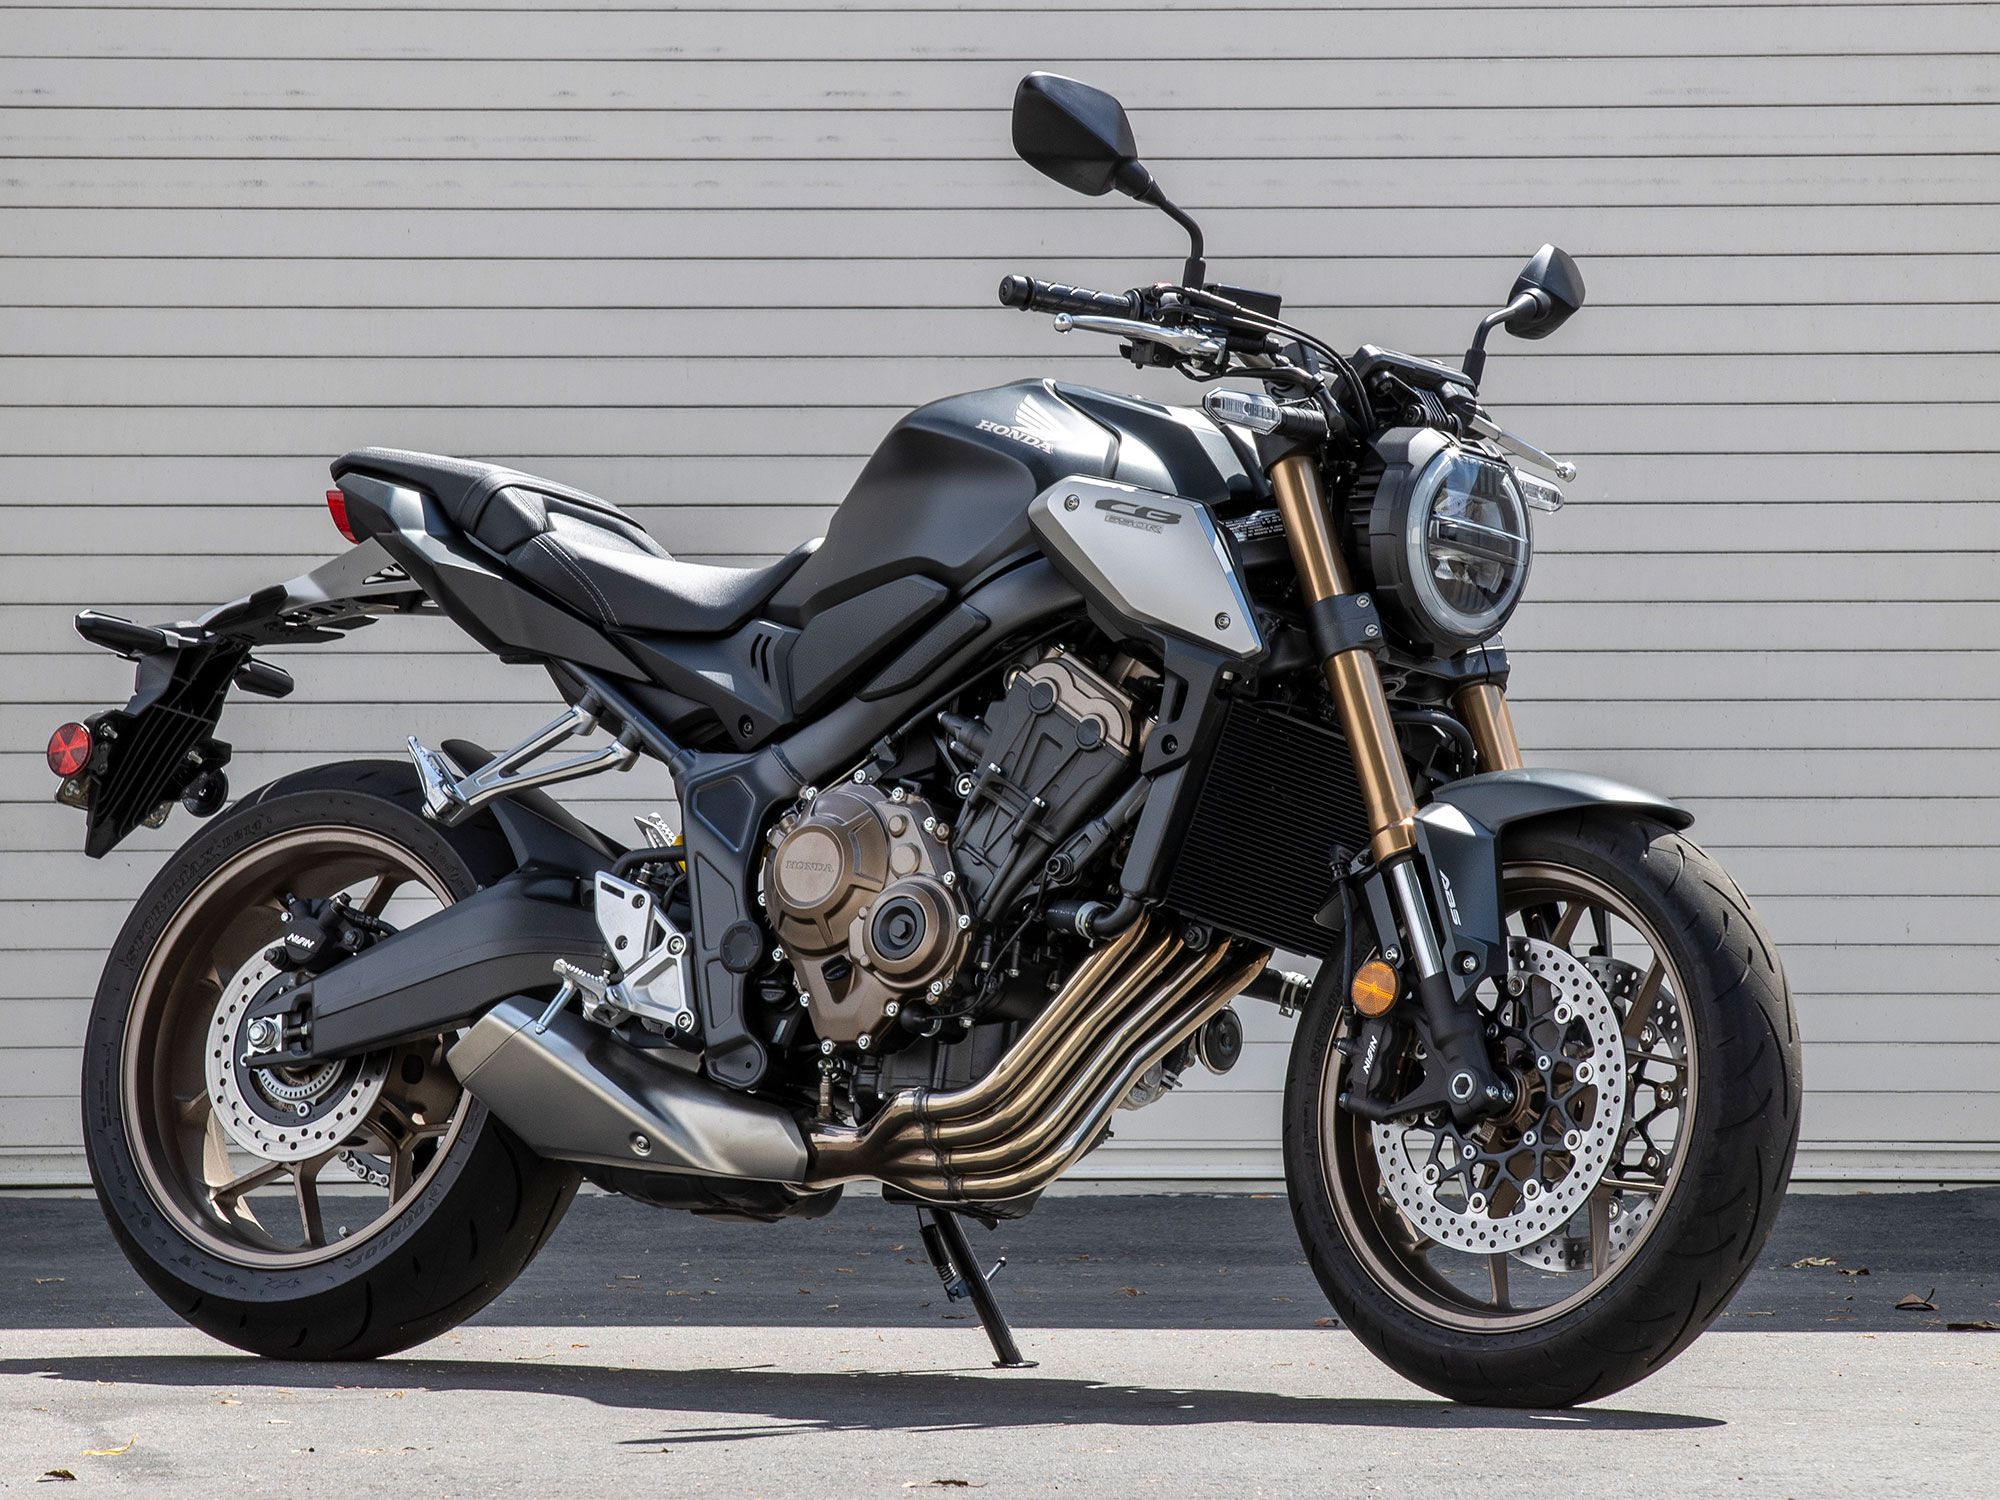 2021 Honda CB650R MC Commute Review | Motorcycle News